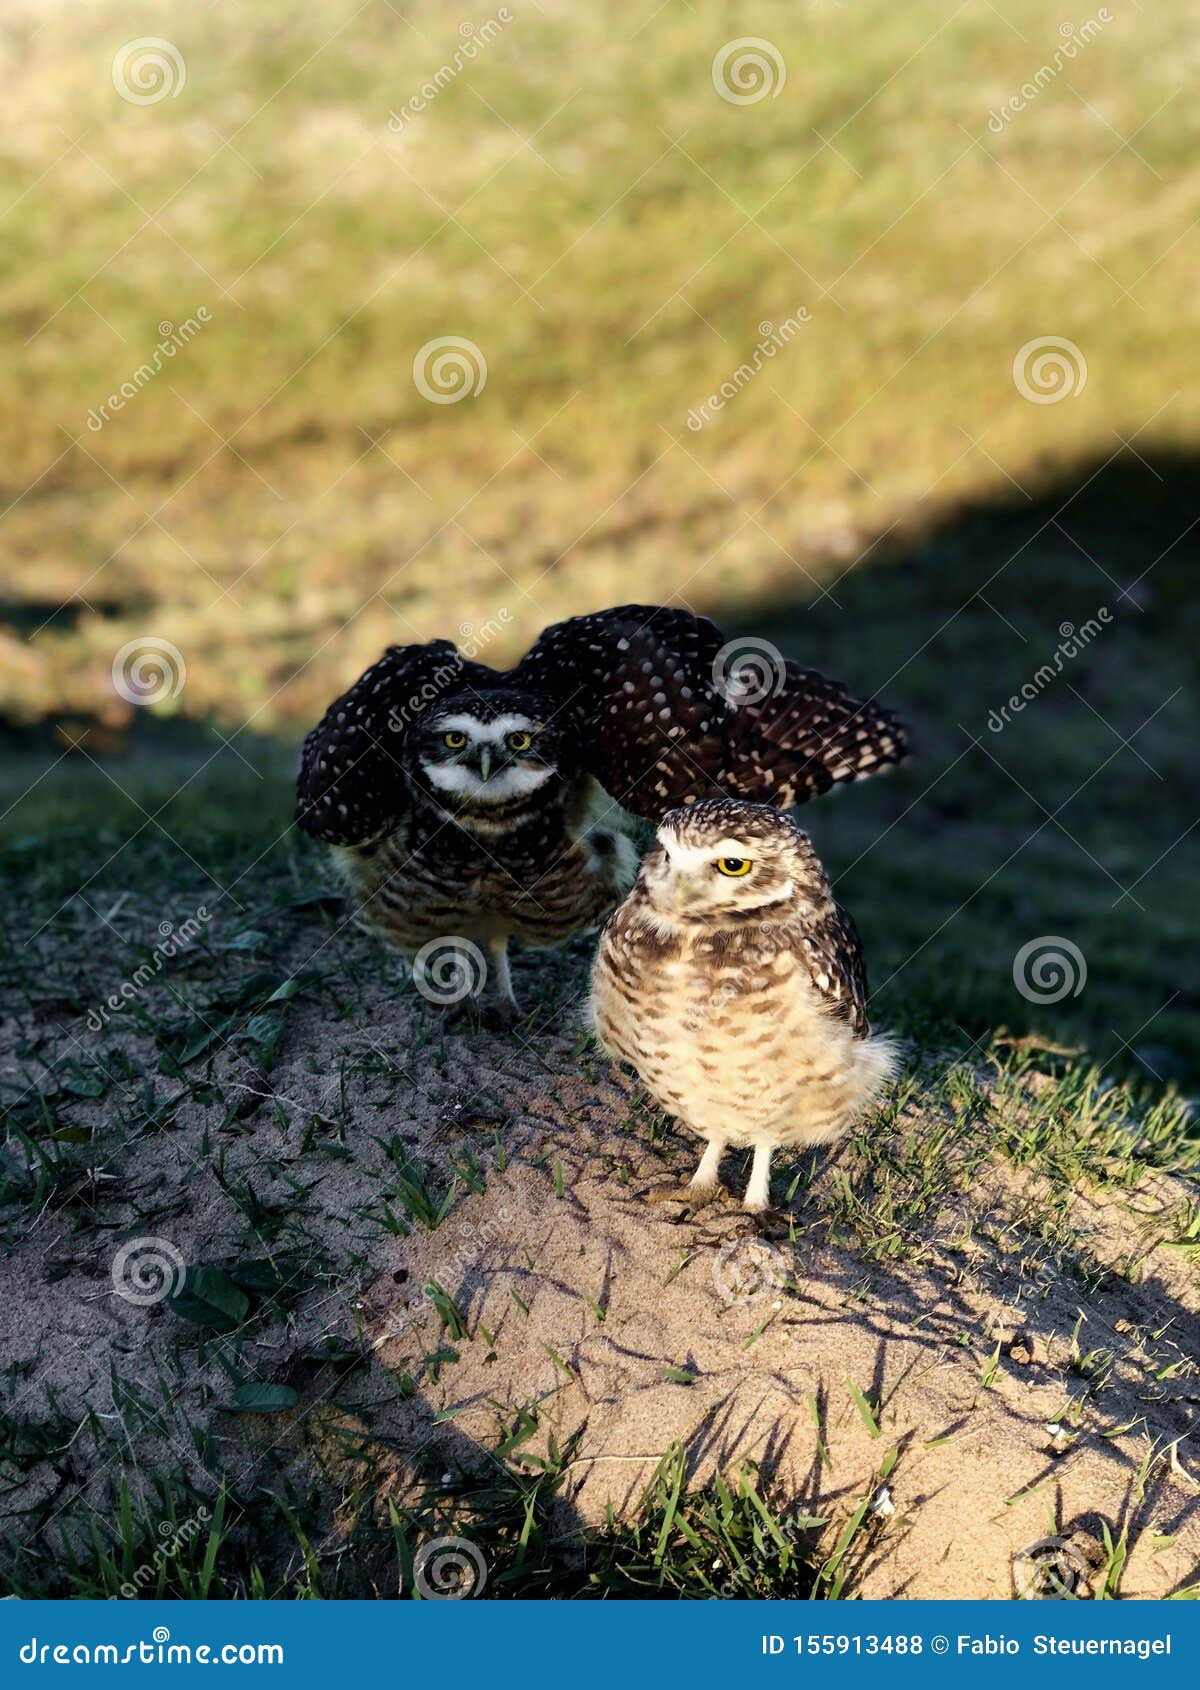 couple of burrowing owls in balneario barra do sul